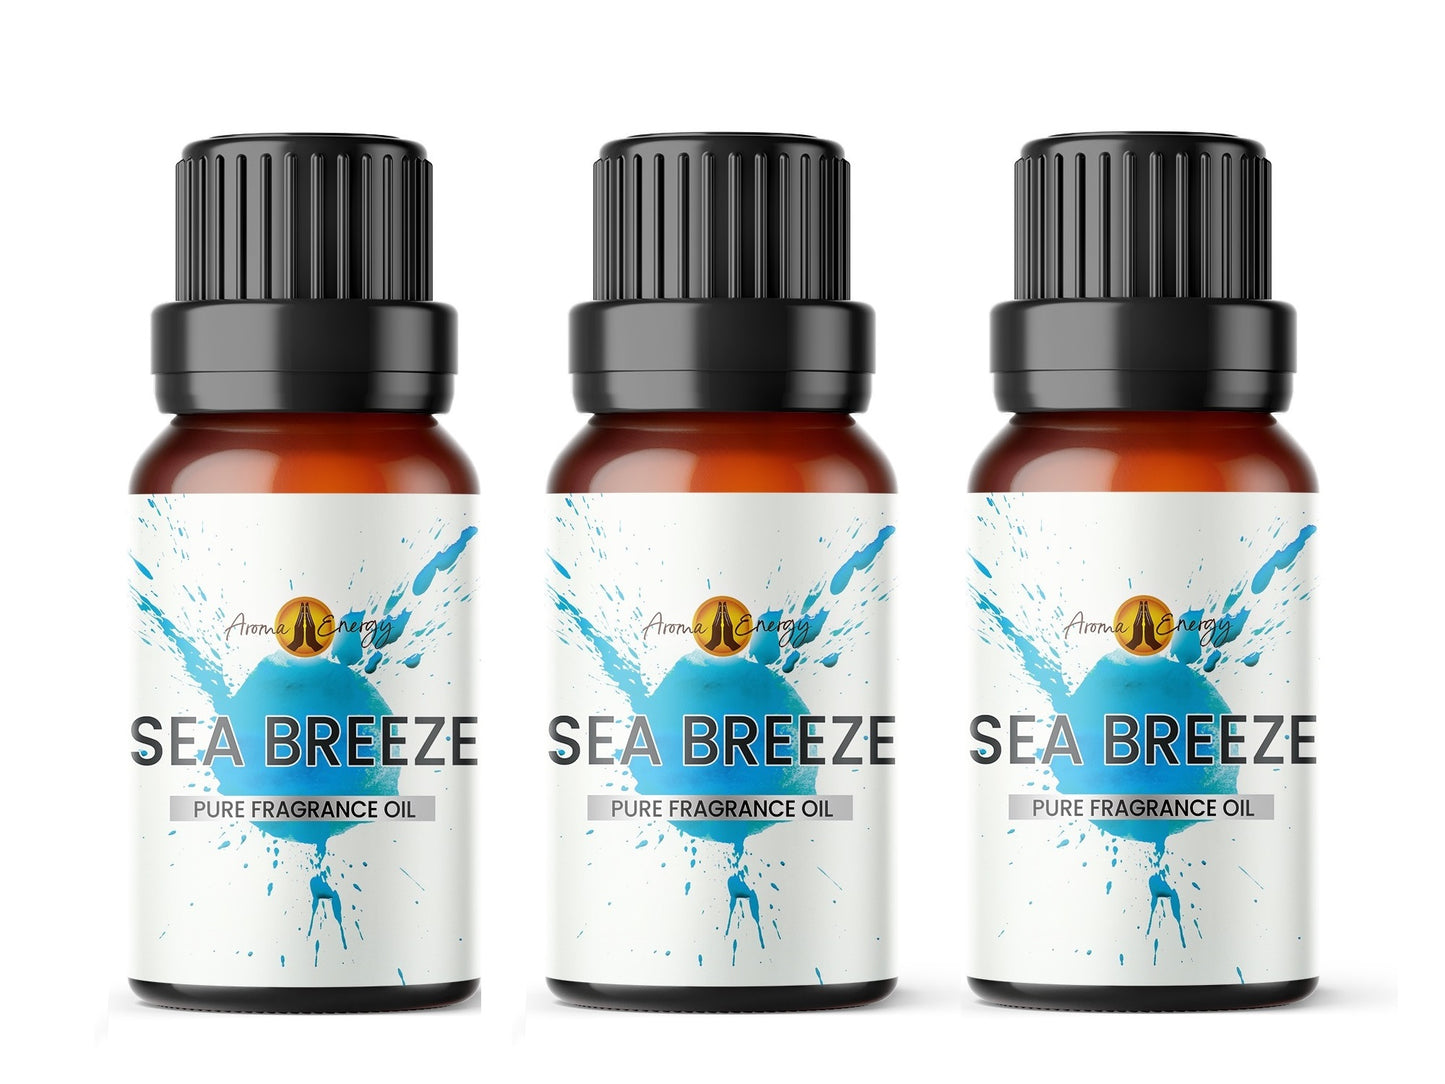 Sea Breeze Fragrance Oil - Aroma Energy